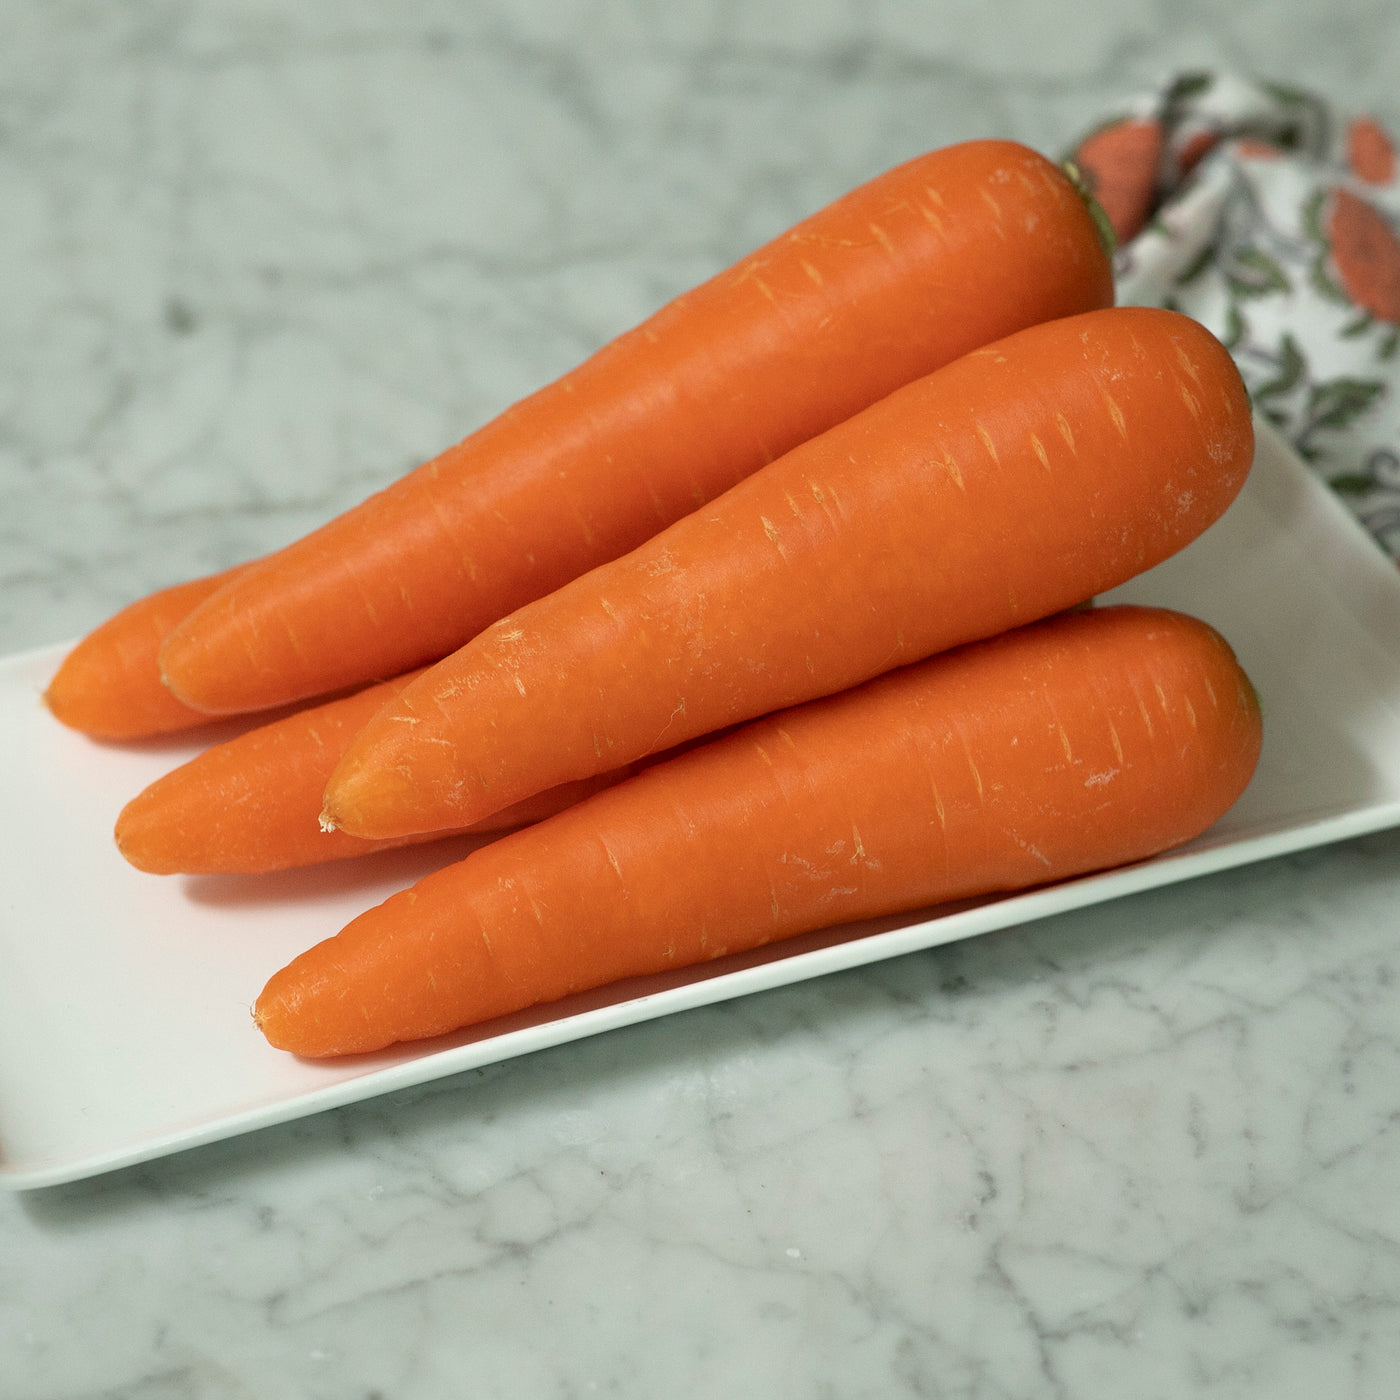 australian-carrot-vegetable-online-delivery-grocery-supermarket-singapore-thenewgrocer